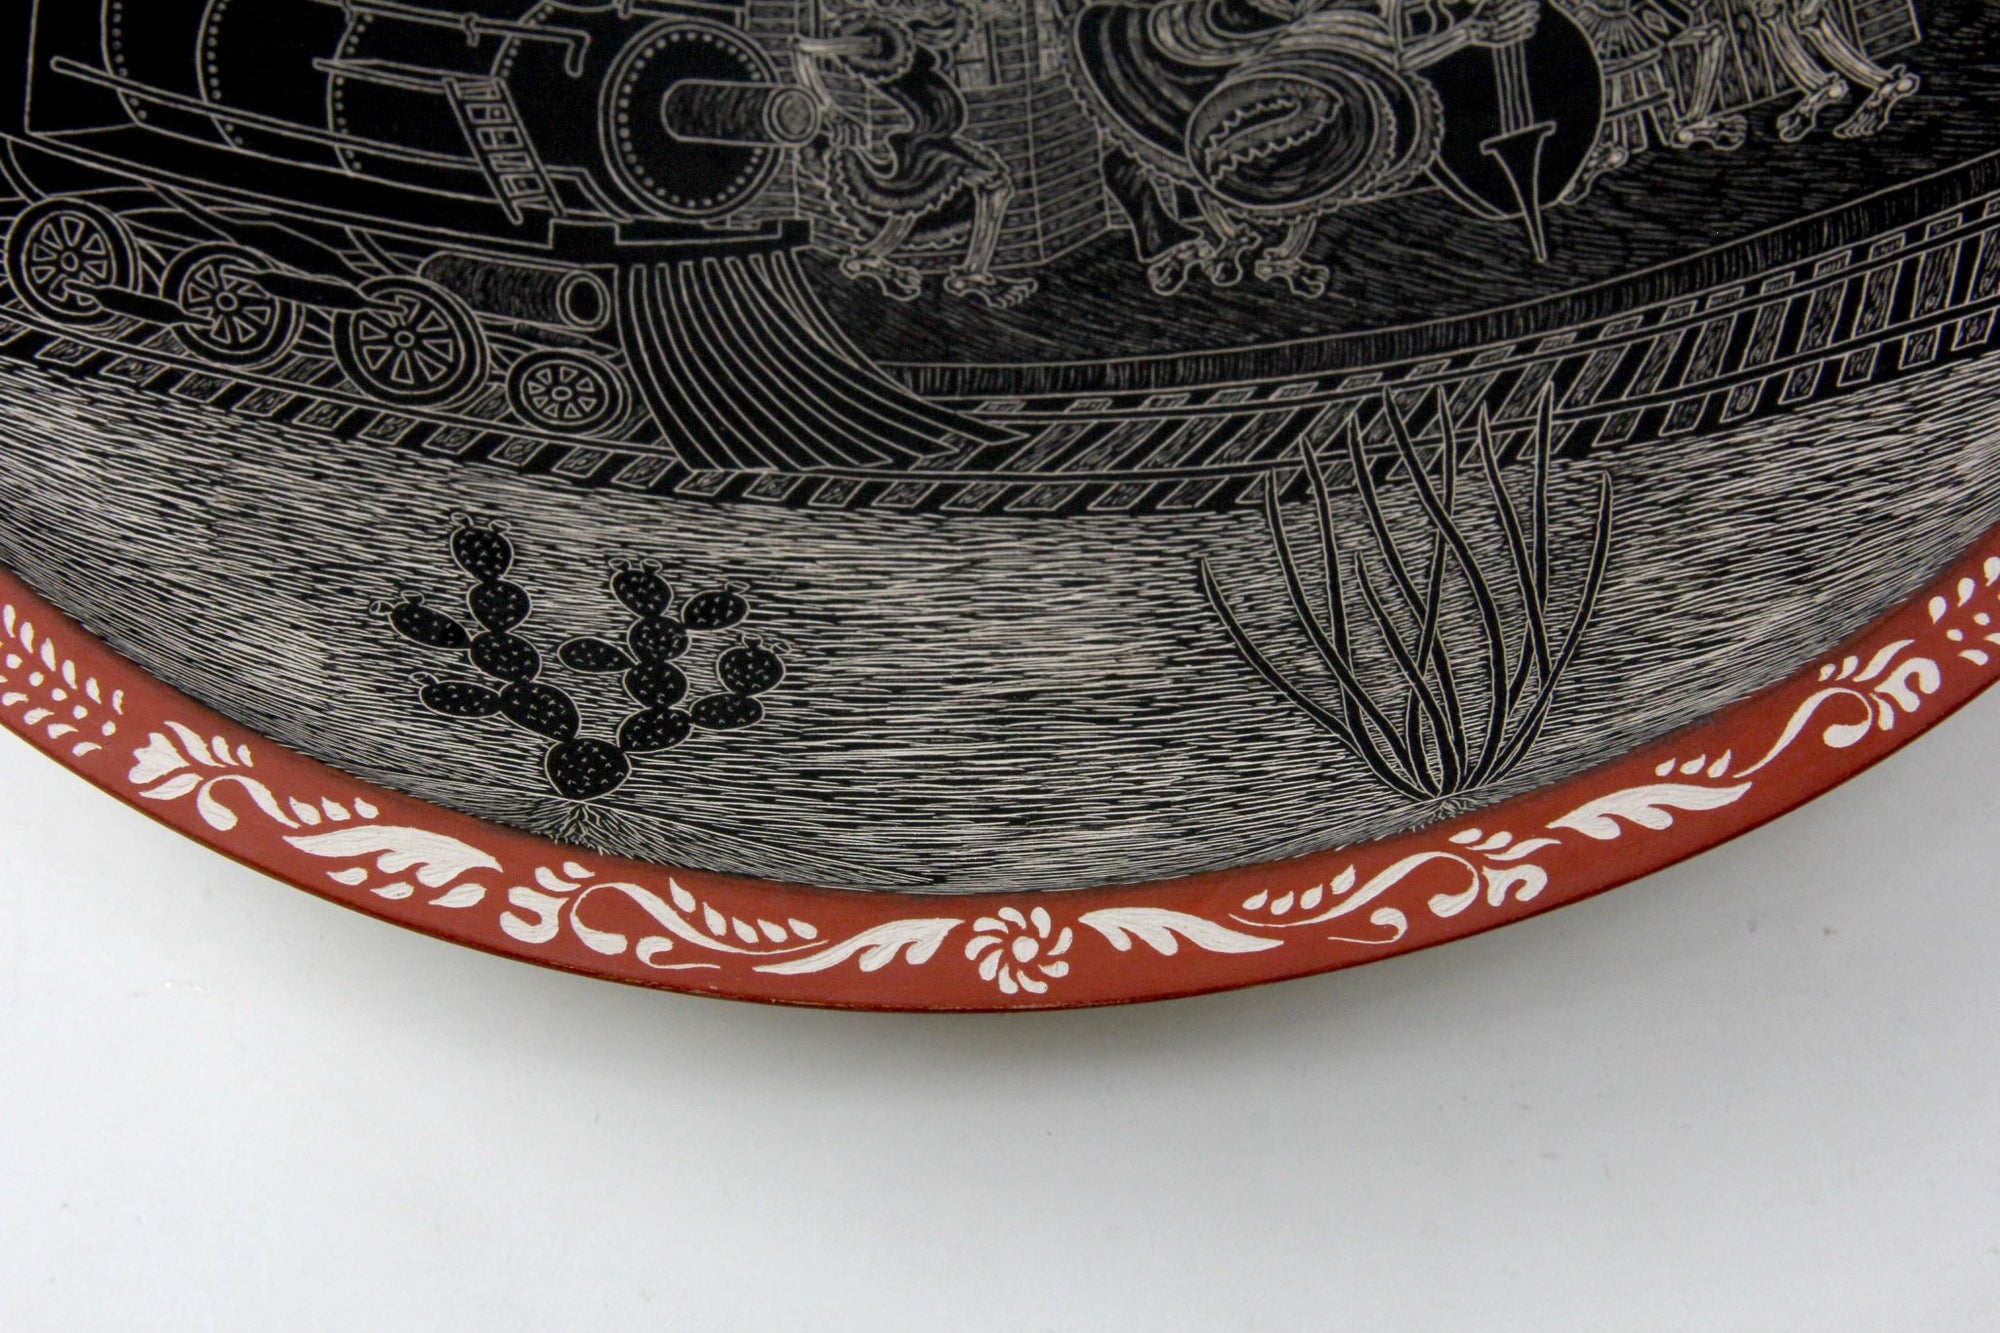 Mata Ortiz Ceramic – Day of the Dead Plate Day Railroad – Huichol-Kunst – Marakame